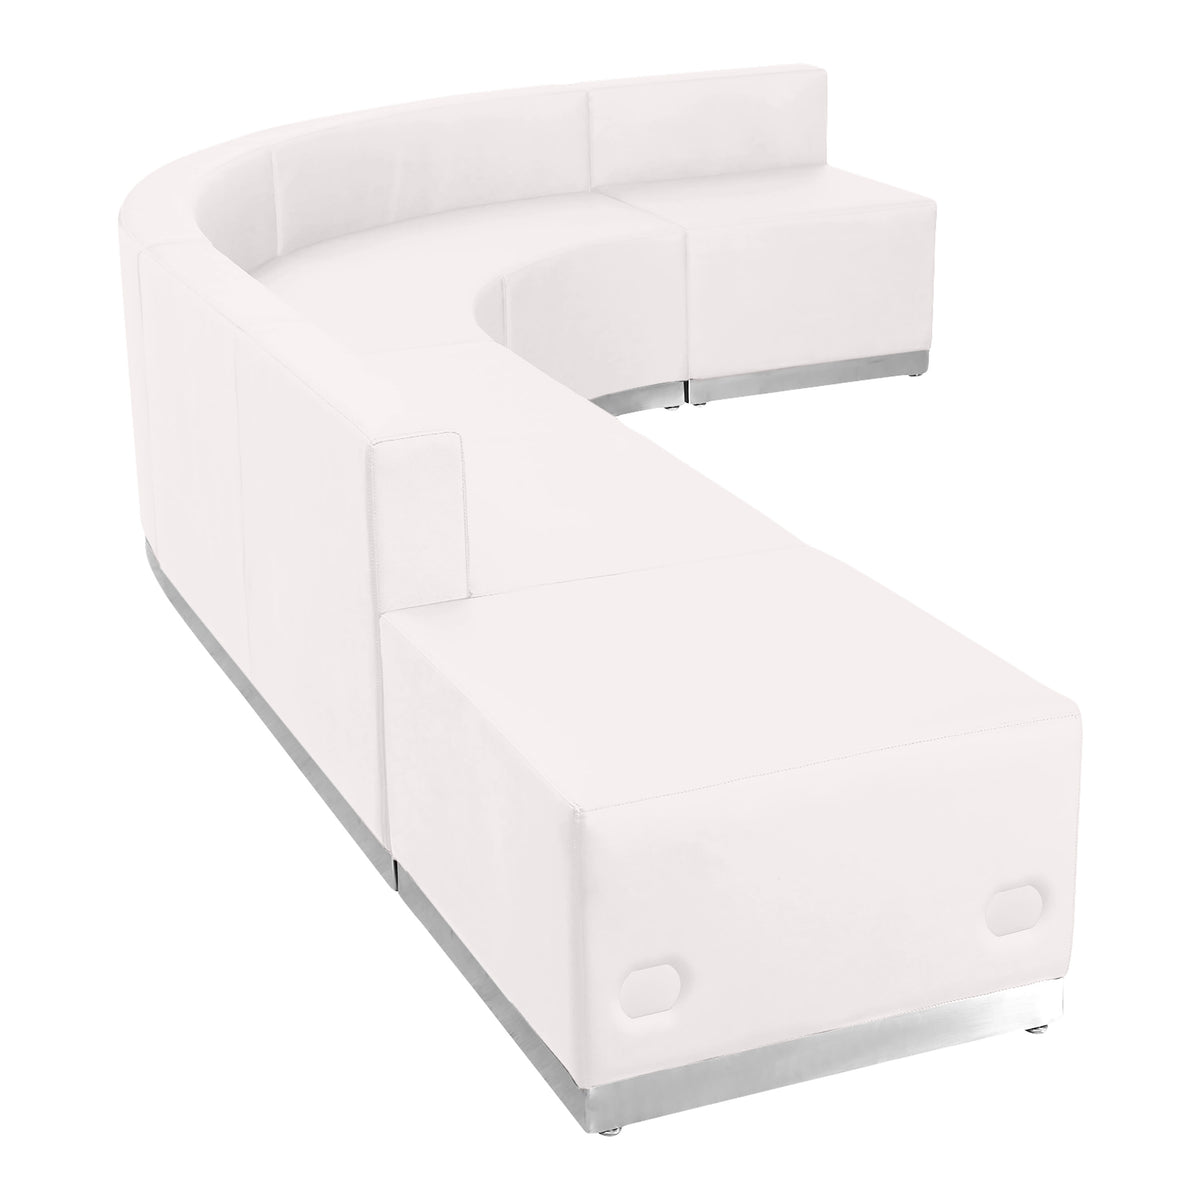 Melrose White |#| 5 PC White LeatherSoft Modular Reception Configuration w/Taut Back &Seat